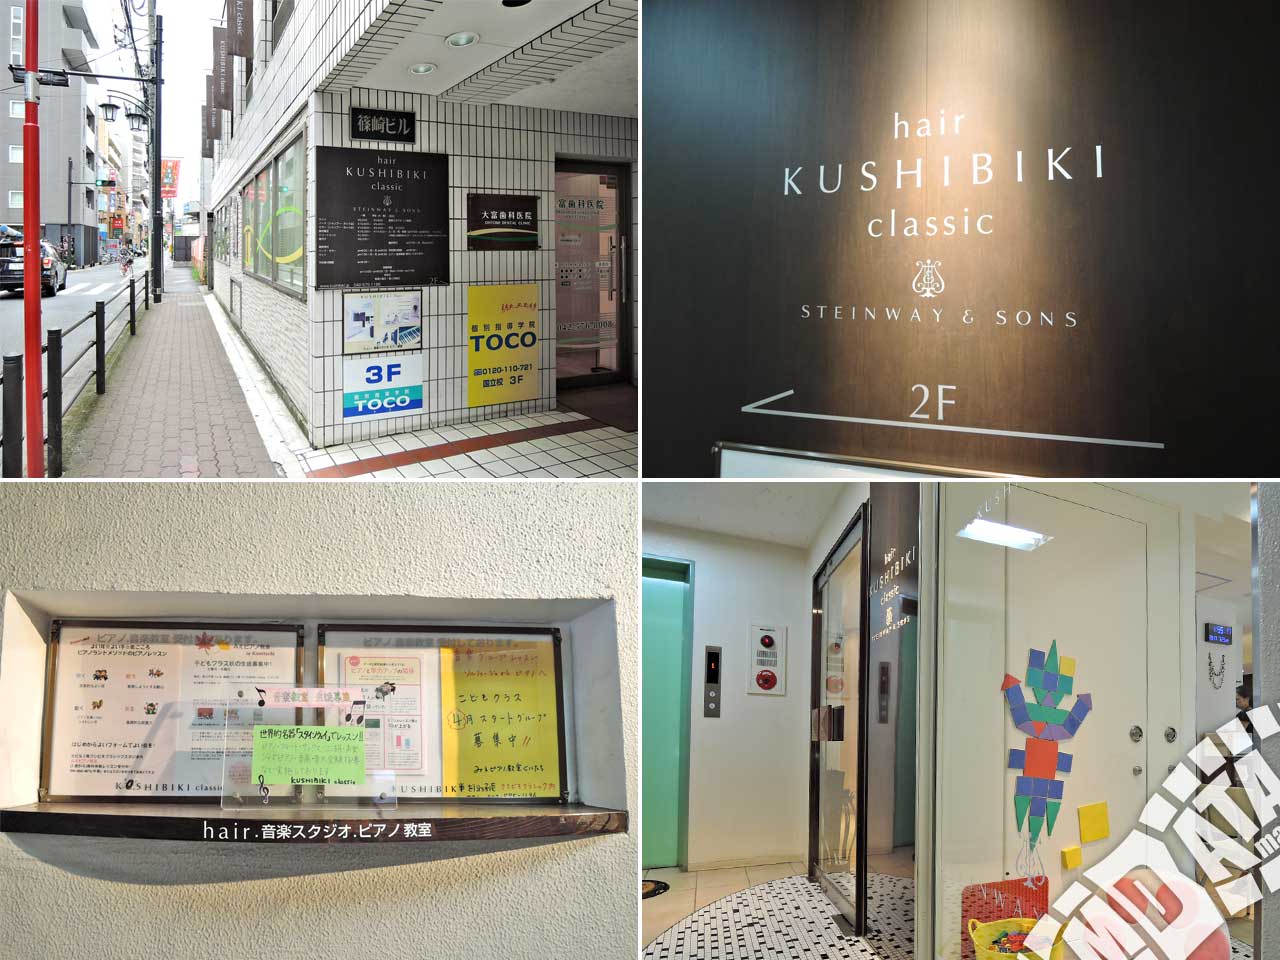 KUSHIBIKI classic スタインウェイスタジオの写真 撮影日:2017/7/31 Photo taken on 2017/07/31